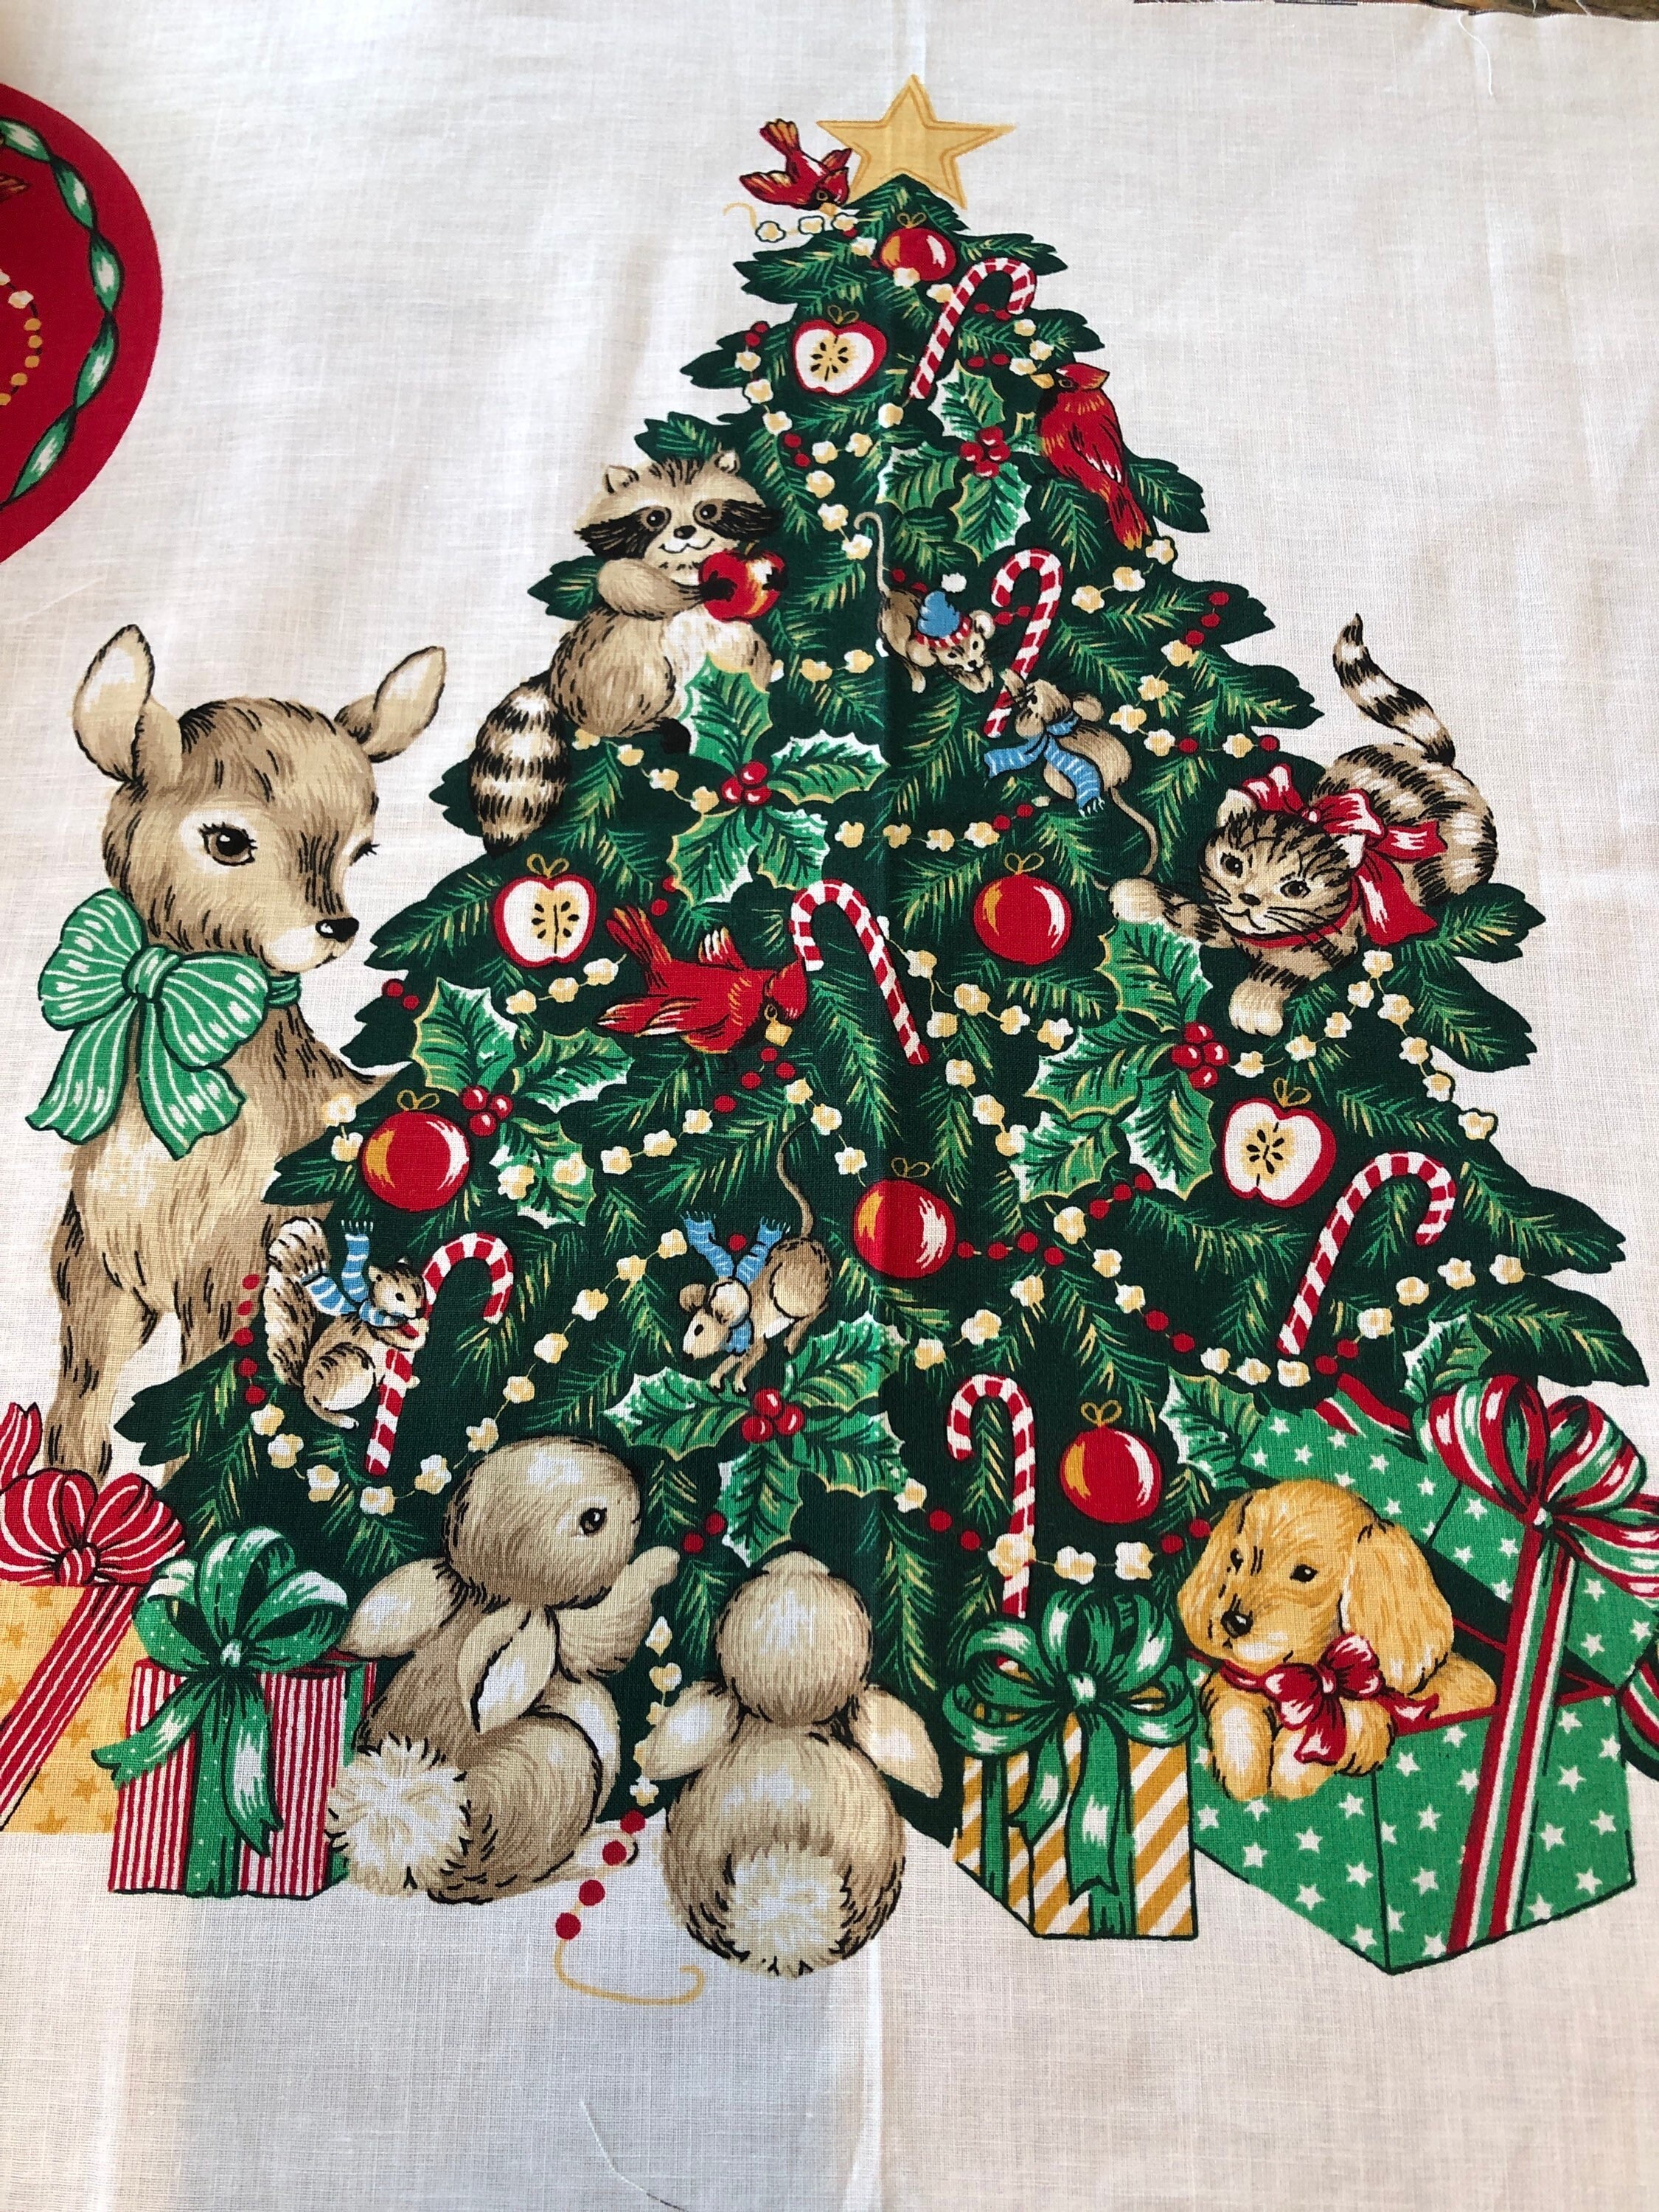 2 DIY felt applique Christmas Stocking KITS - arts & crafts - by owner -  sale - craigslist